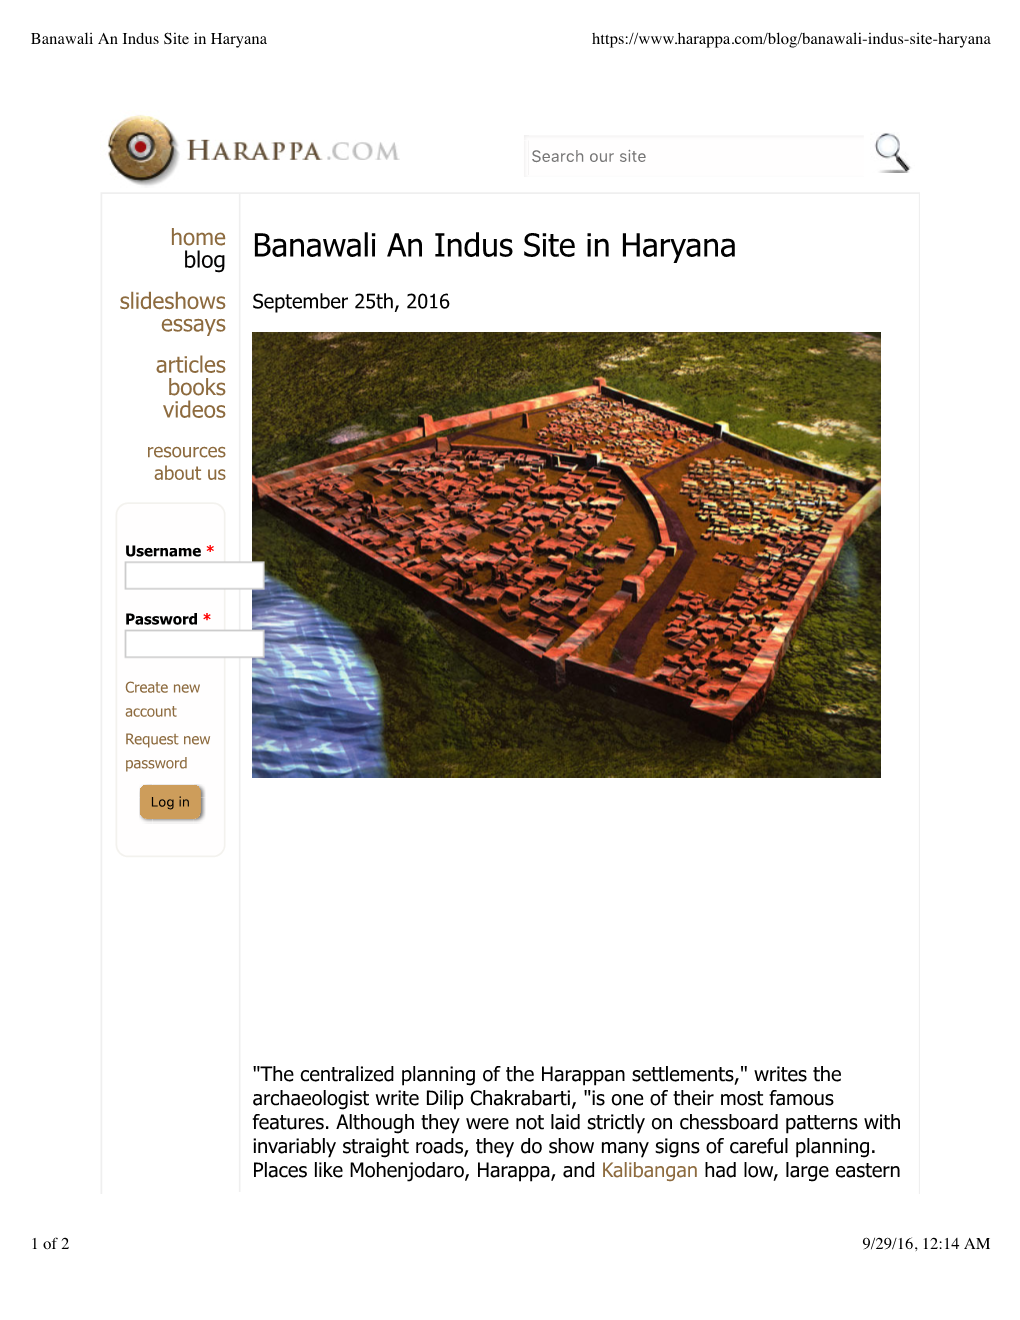 Banawali an Indus Site in Haryana